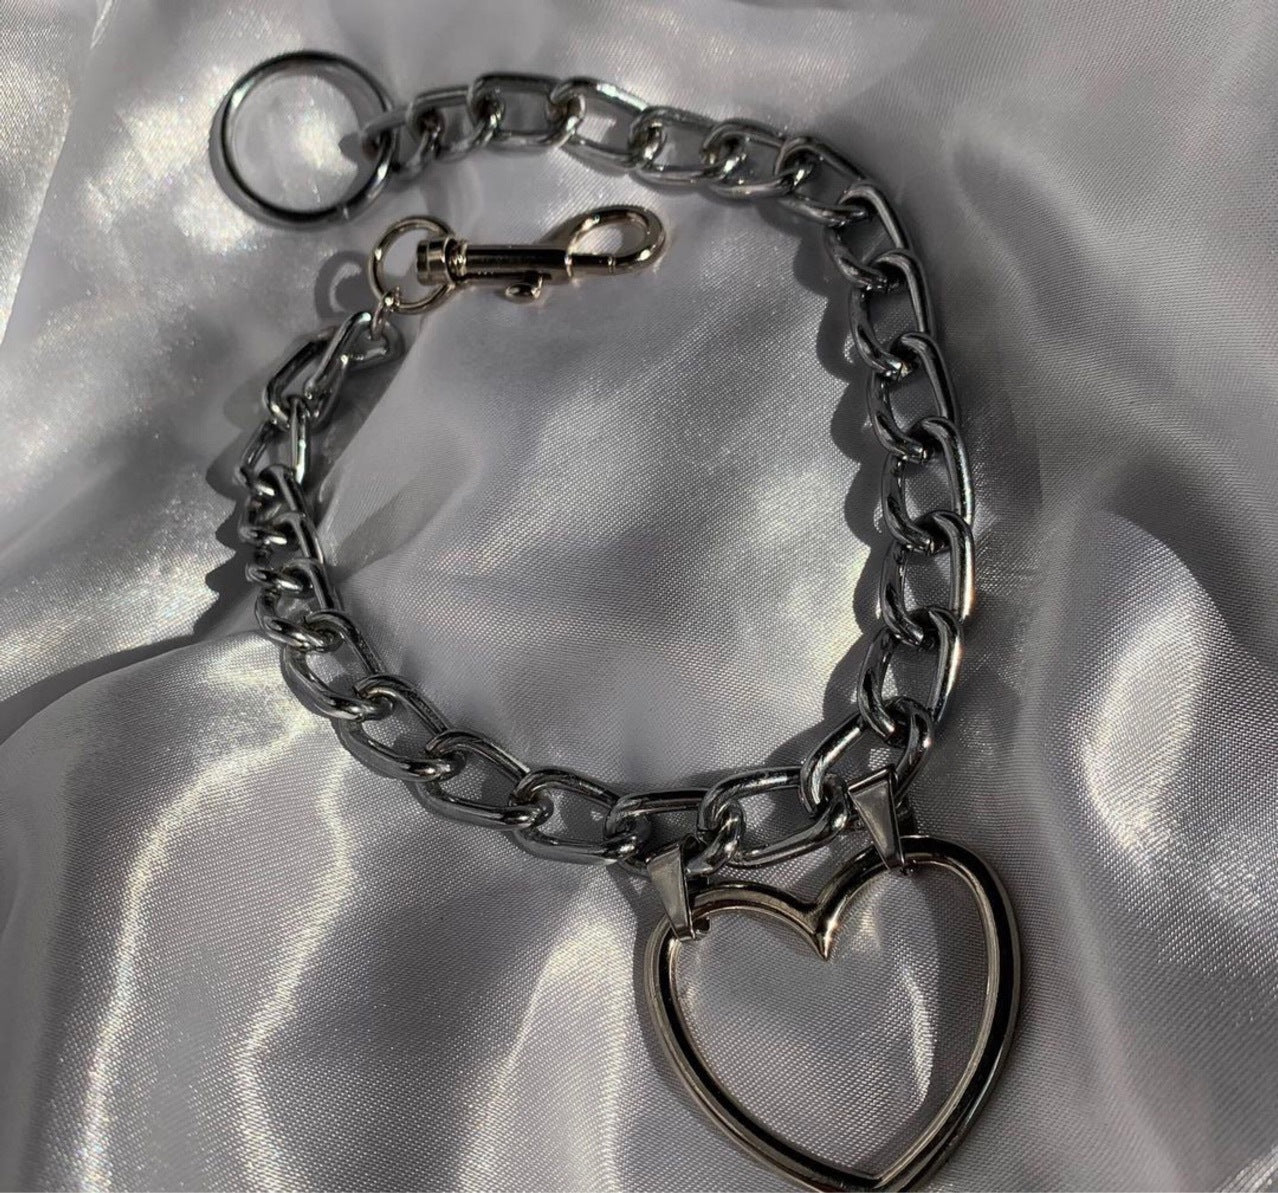 Retro Alloy Thick Chain Peach Heart Exaggerated Design Punk Necklace